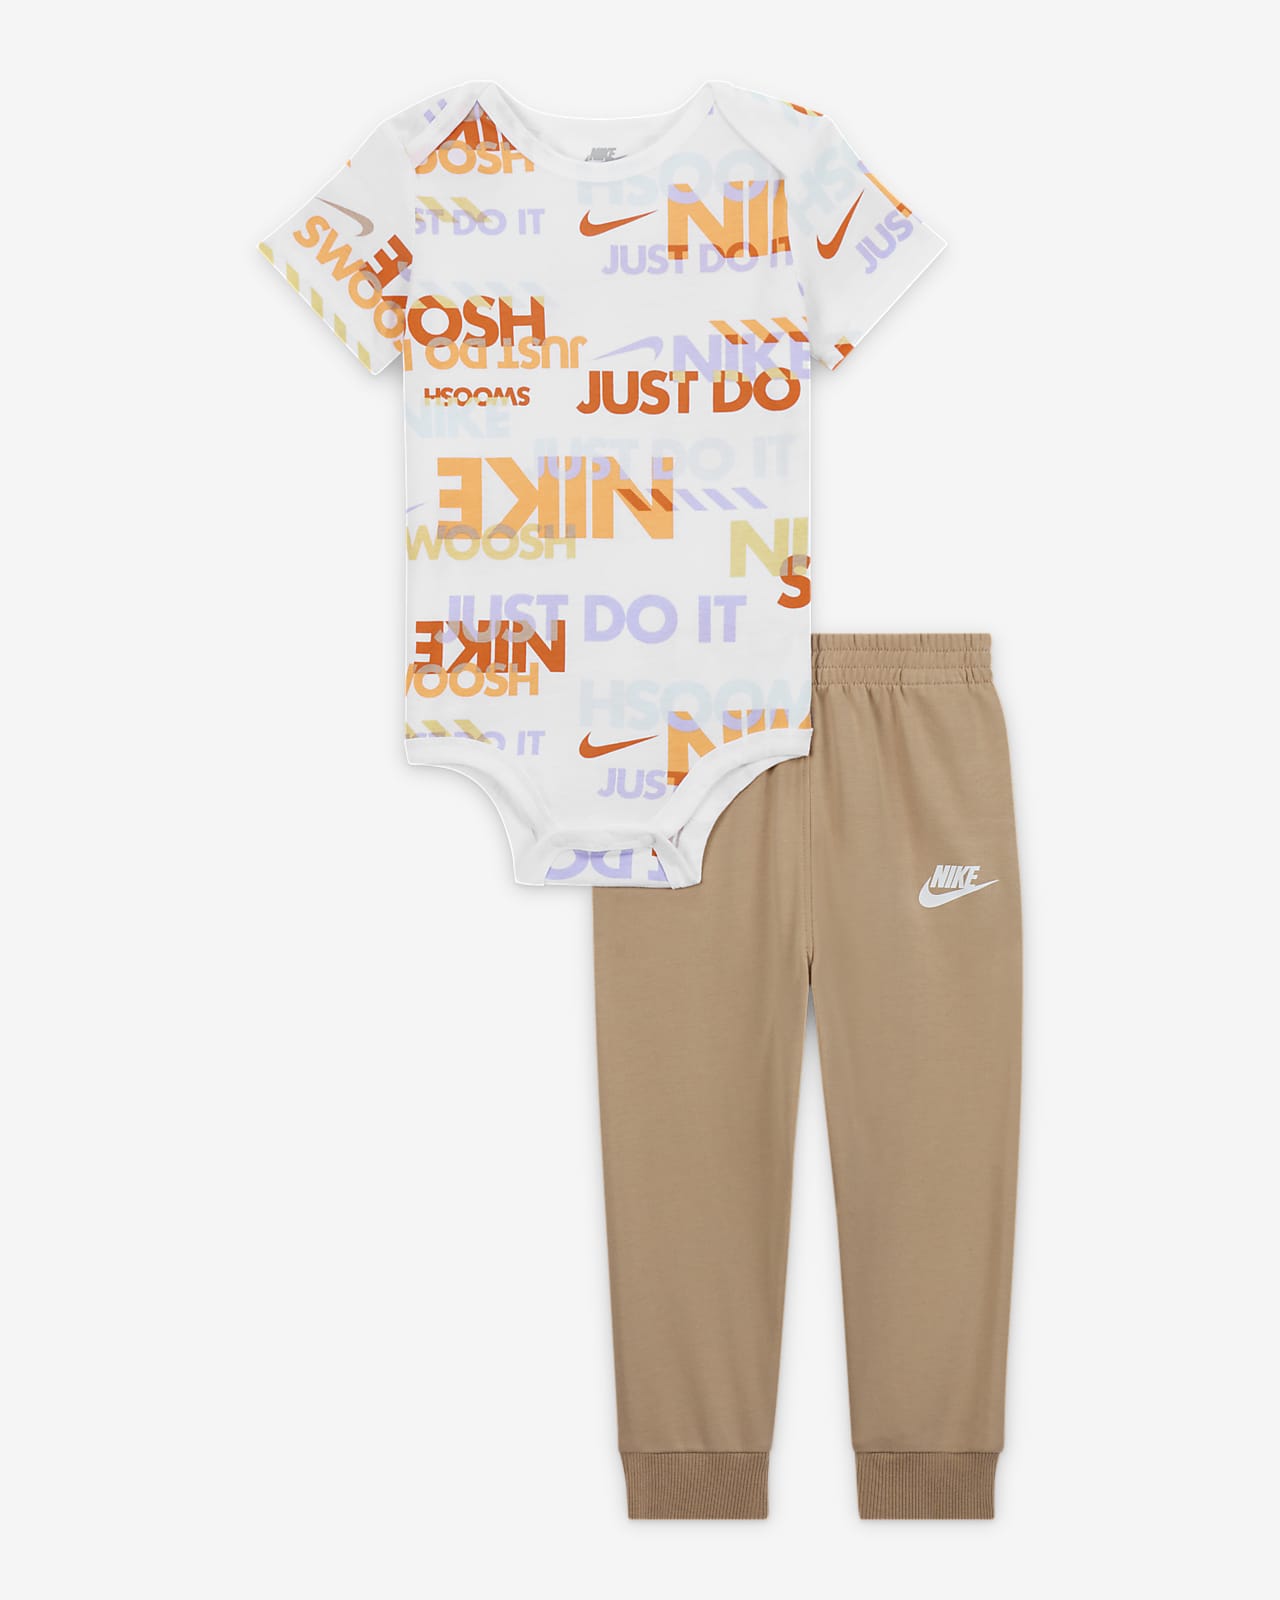 Nike Sportswear Playful Exploration Baby (12-24M) Printed Bodysuit and Pants Set